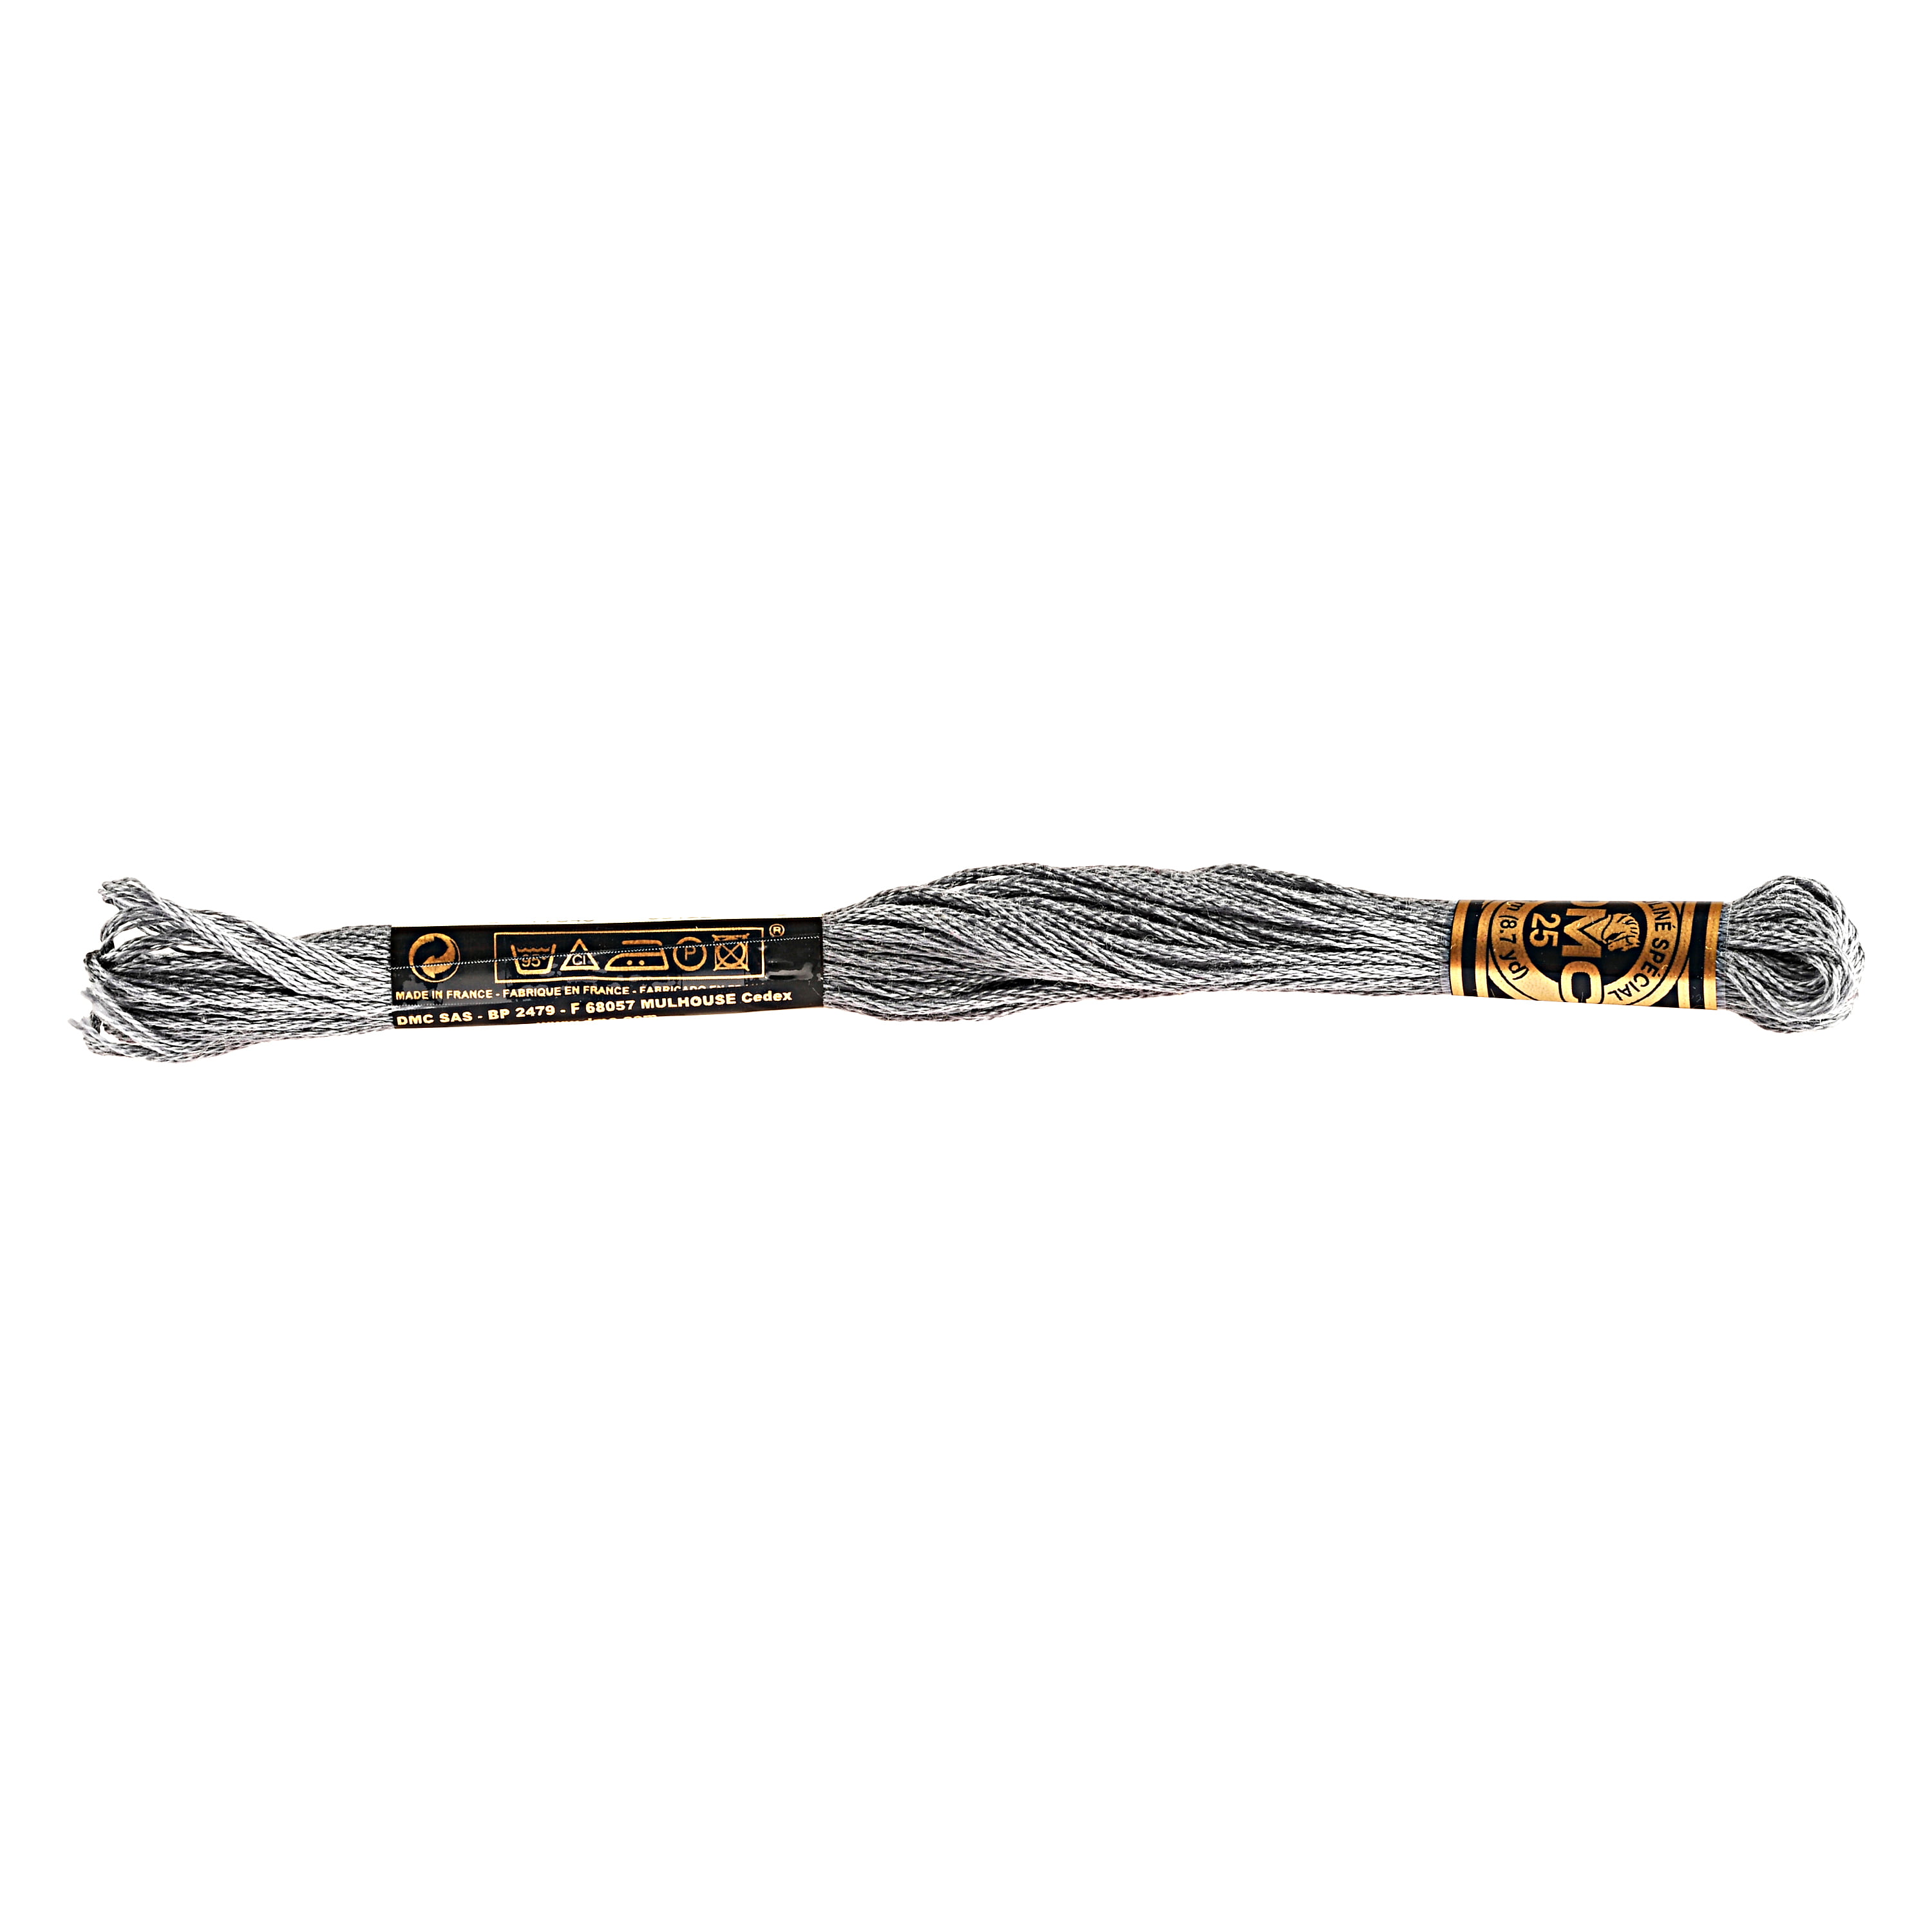 CXC 3799 Dark Grey Black Embroidery Thread by Metre, Cut 1-metre Lengths,  40x1 Metre Bundle, Cross Stitch Floss Full Cone, Colour Match DMC 